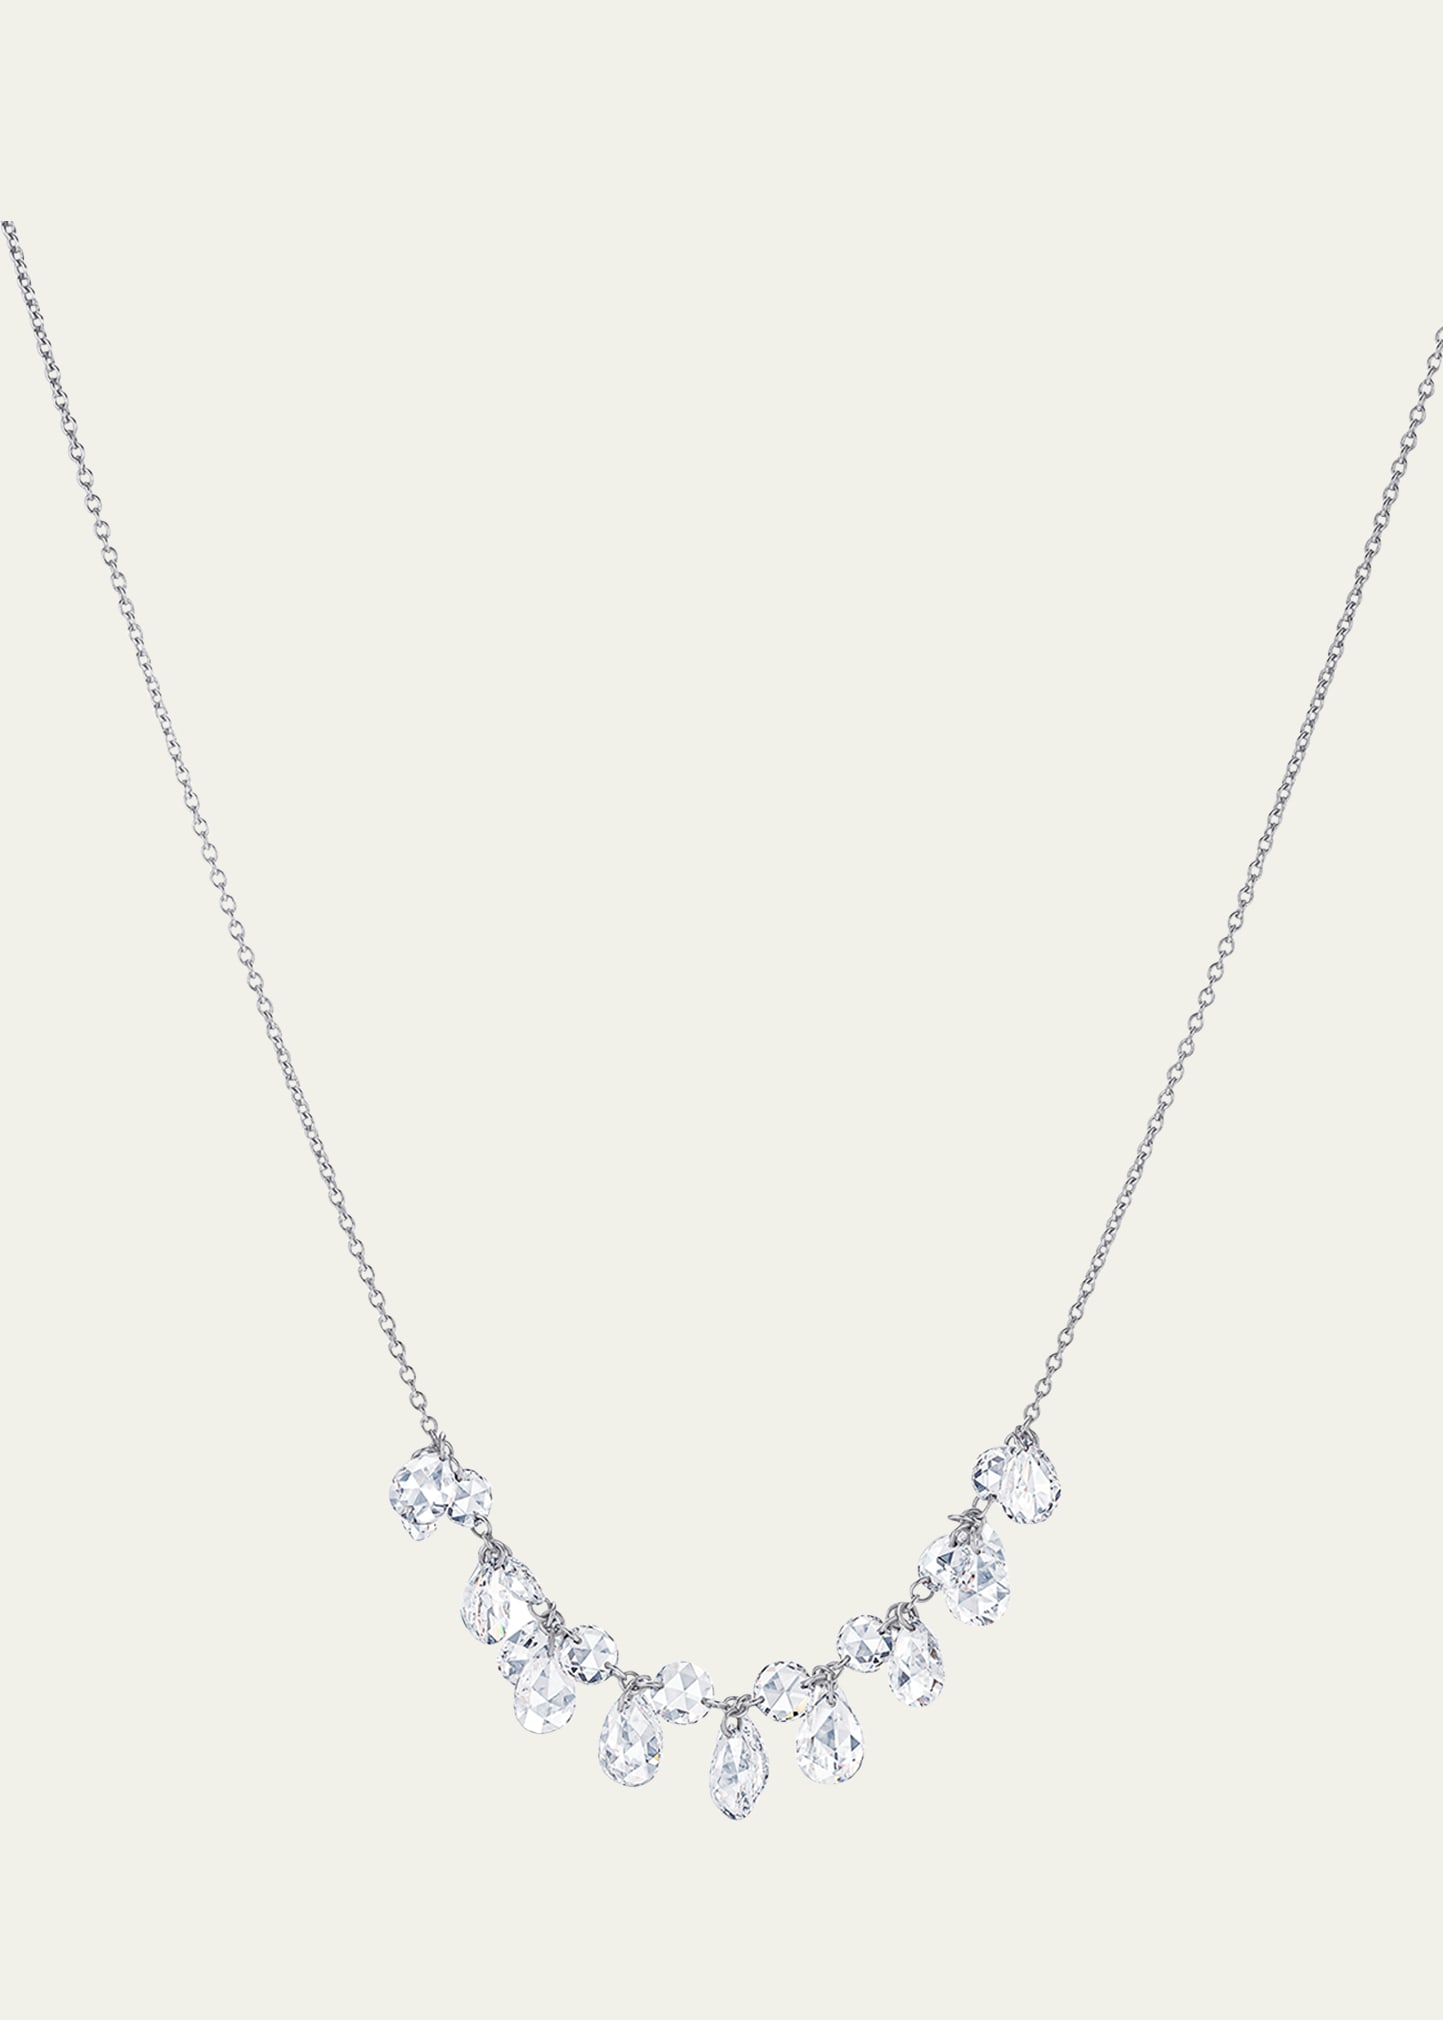 64 Facets 18k Gold Cluster Diamond Pendant Necklace